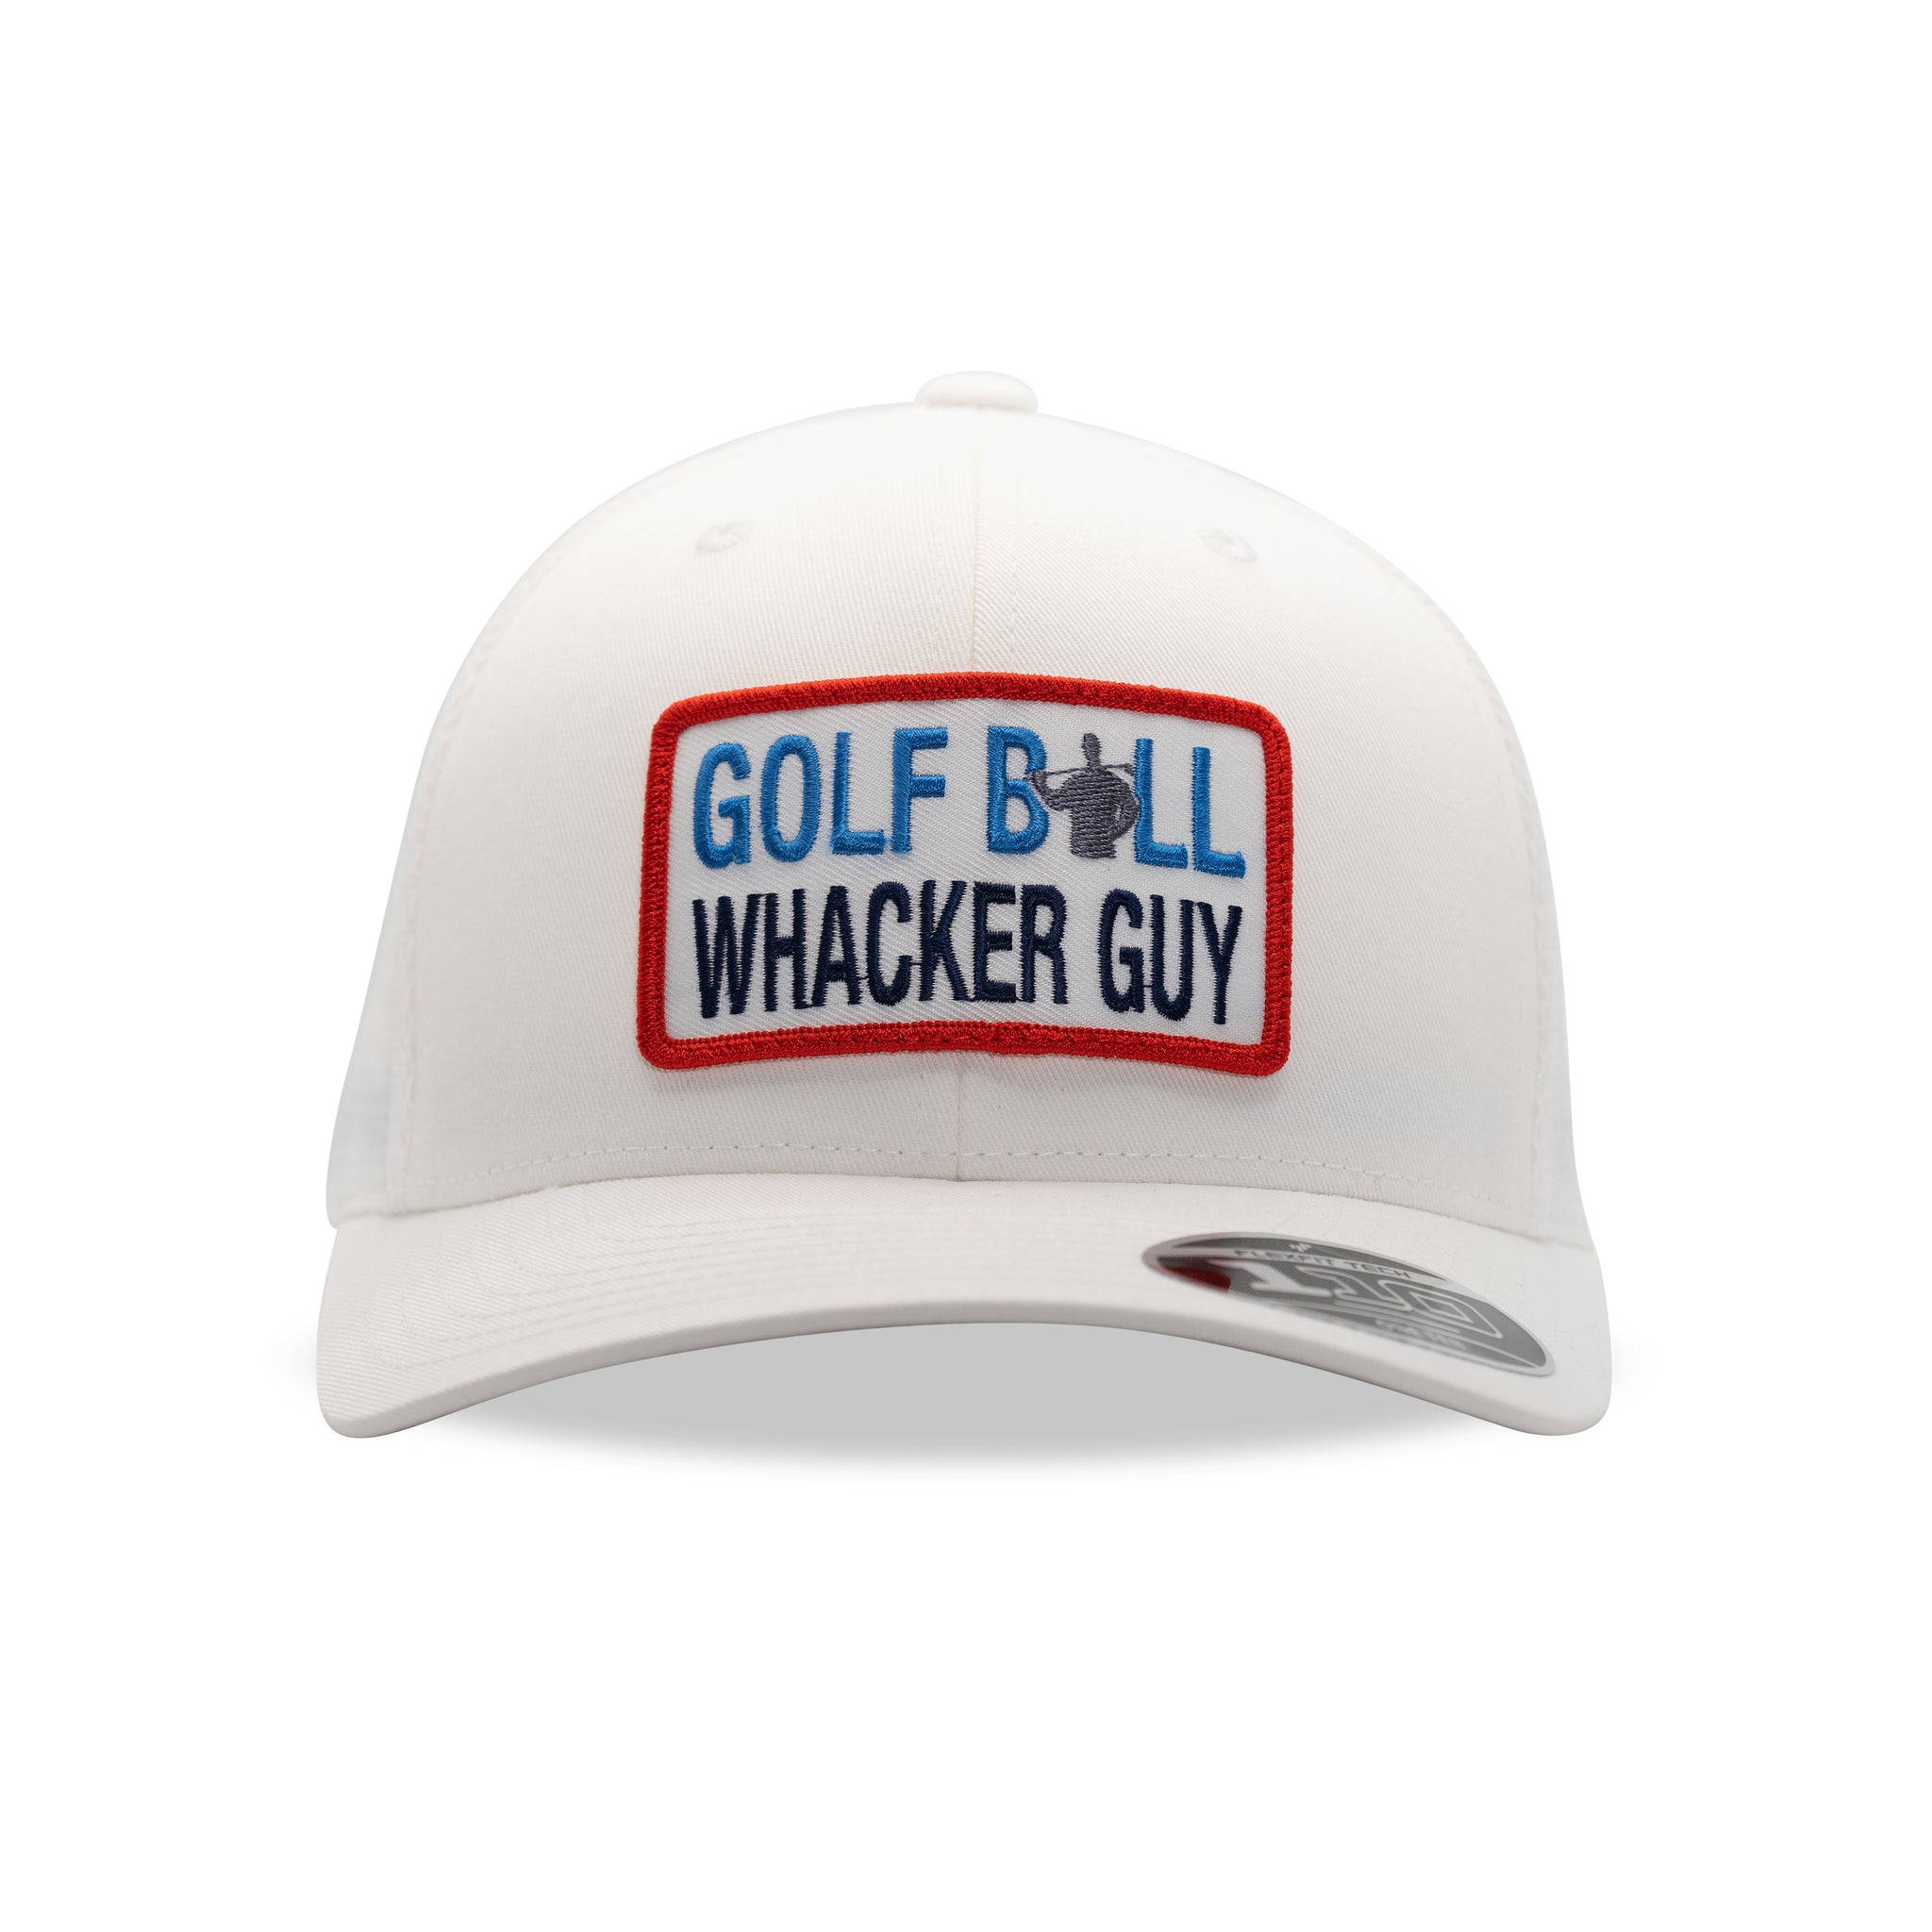 Sandies - Golf Ball Whacker Guy